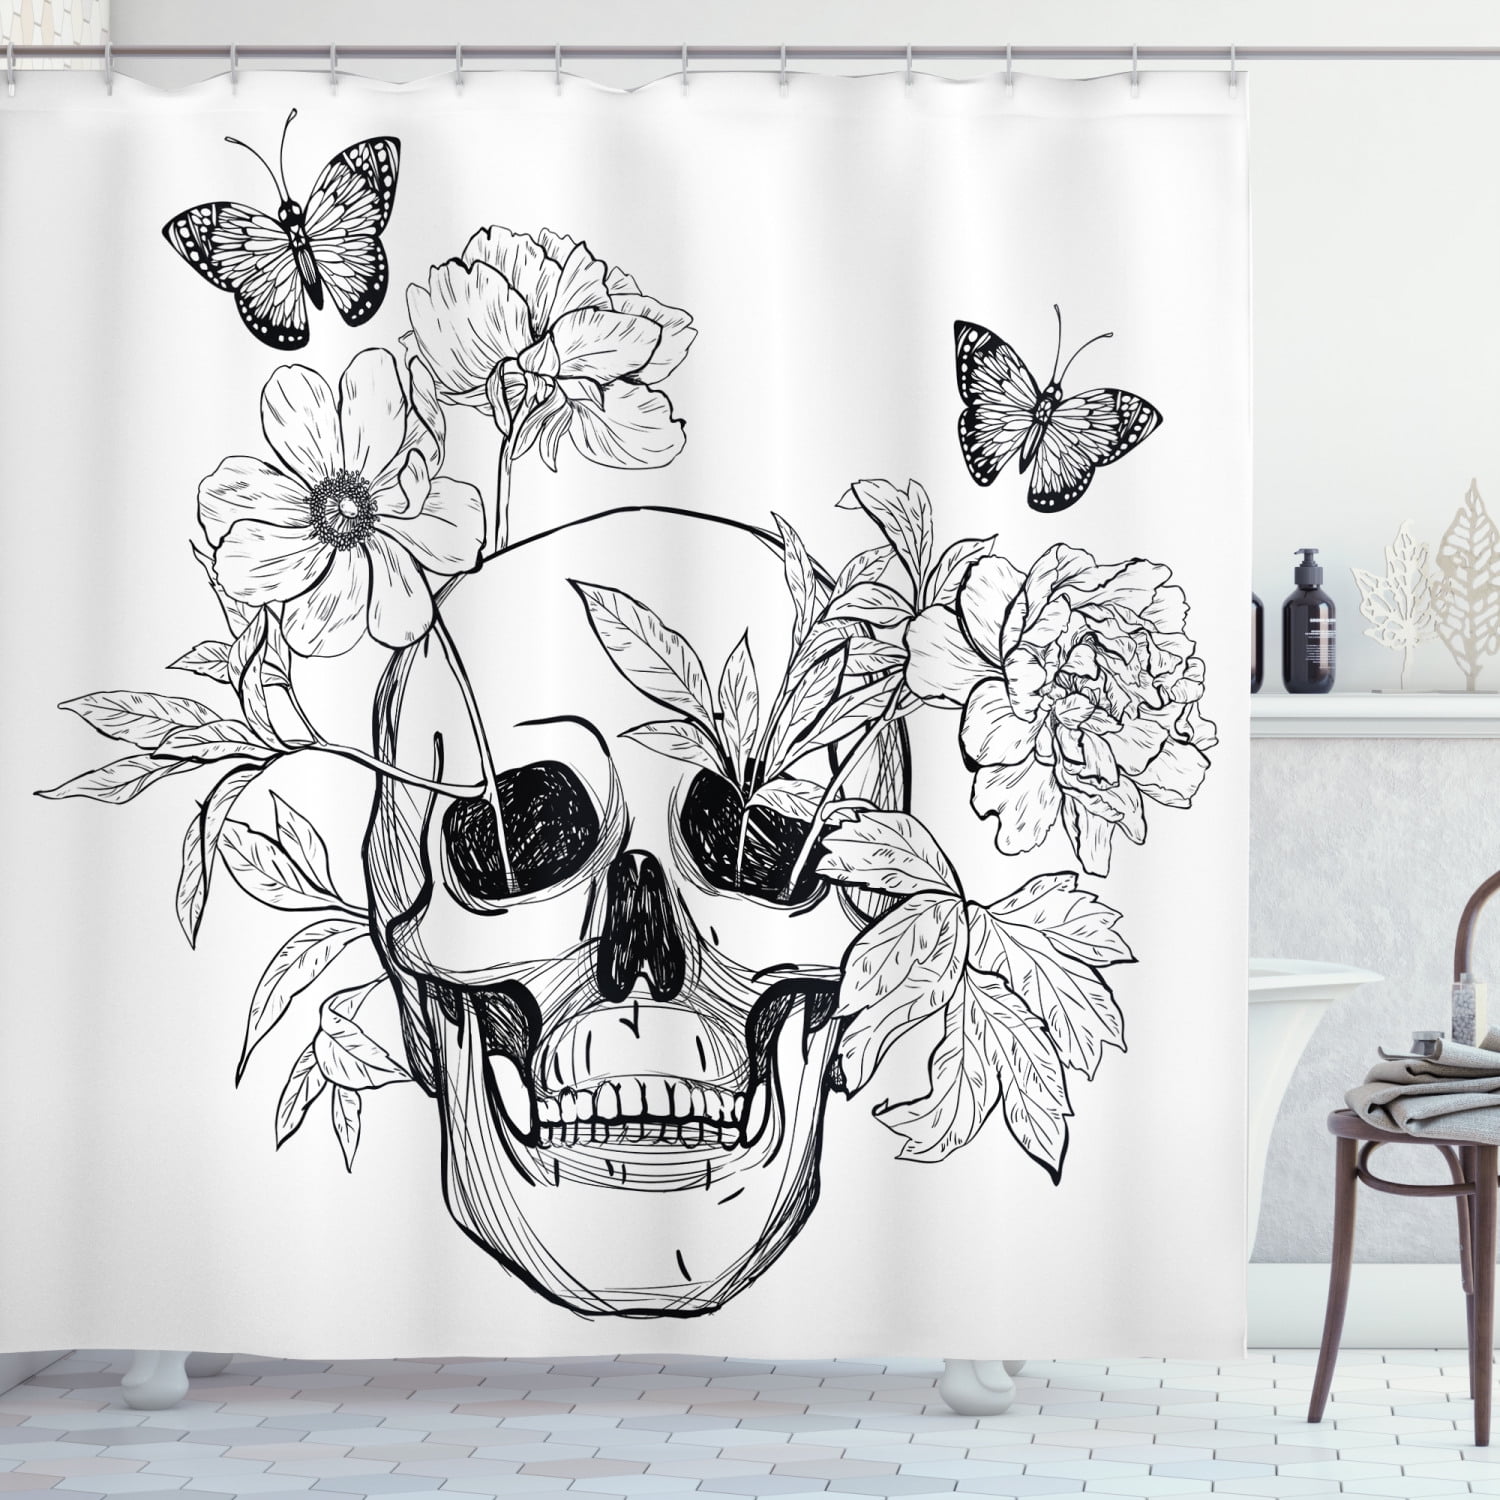 Sugar Skull Shower Curtain Liner Polyester Fabric & Hooks Bathroom Accessories 